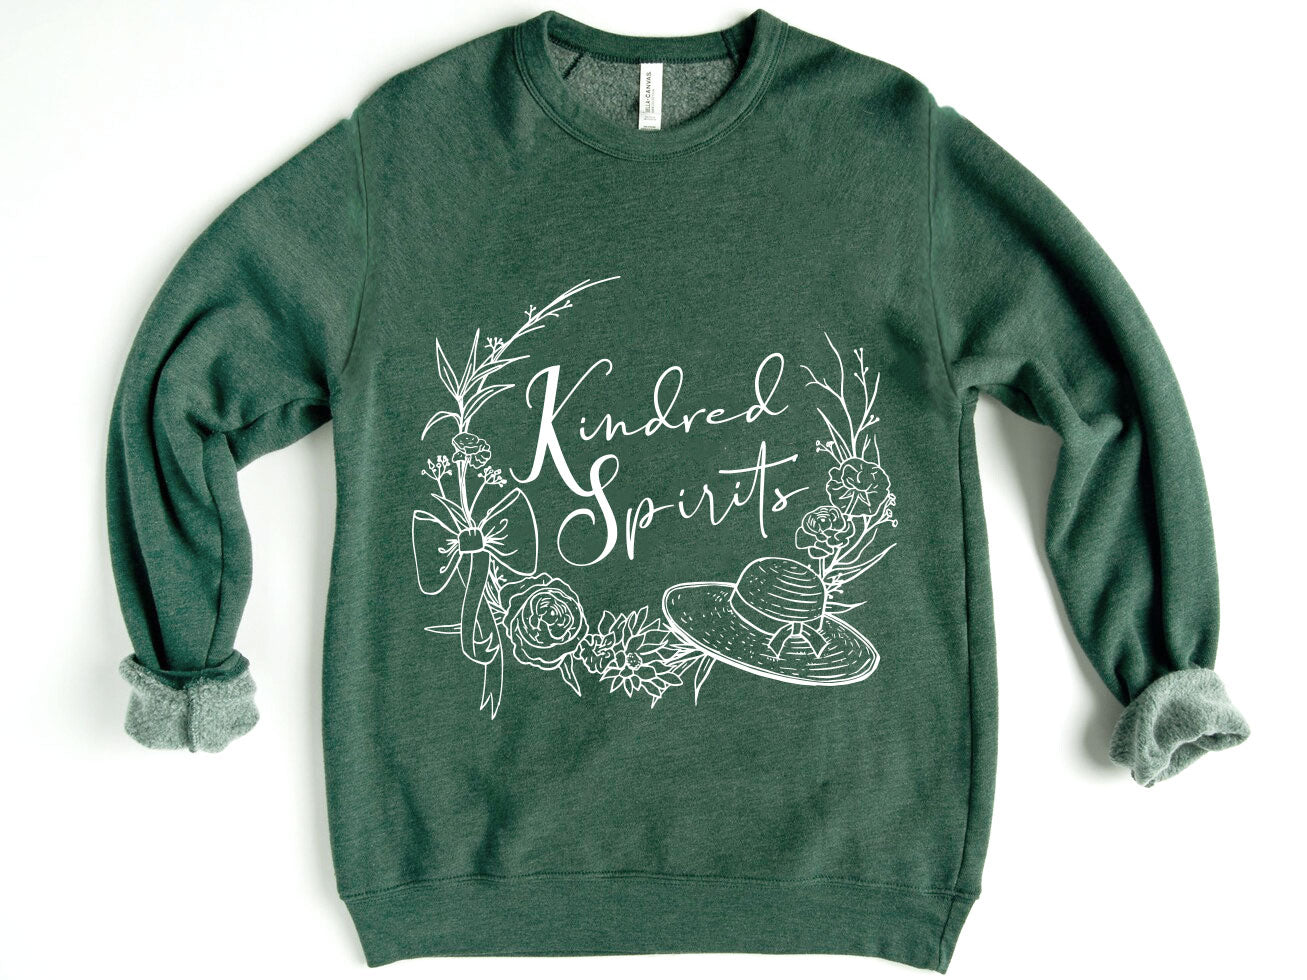 Anne of Green Gables Kindred Spirits Sweatshirt